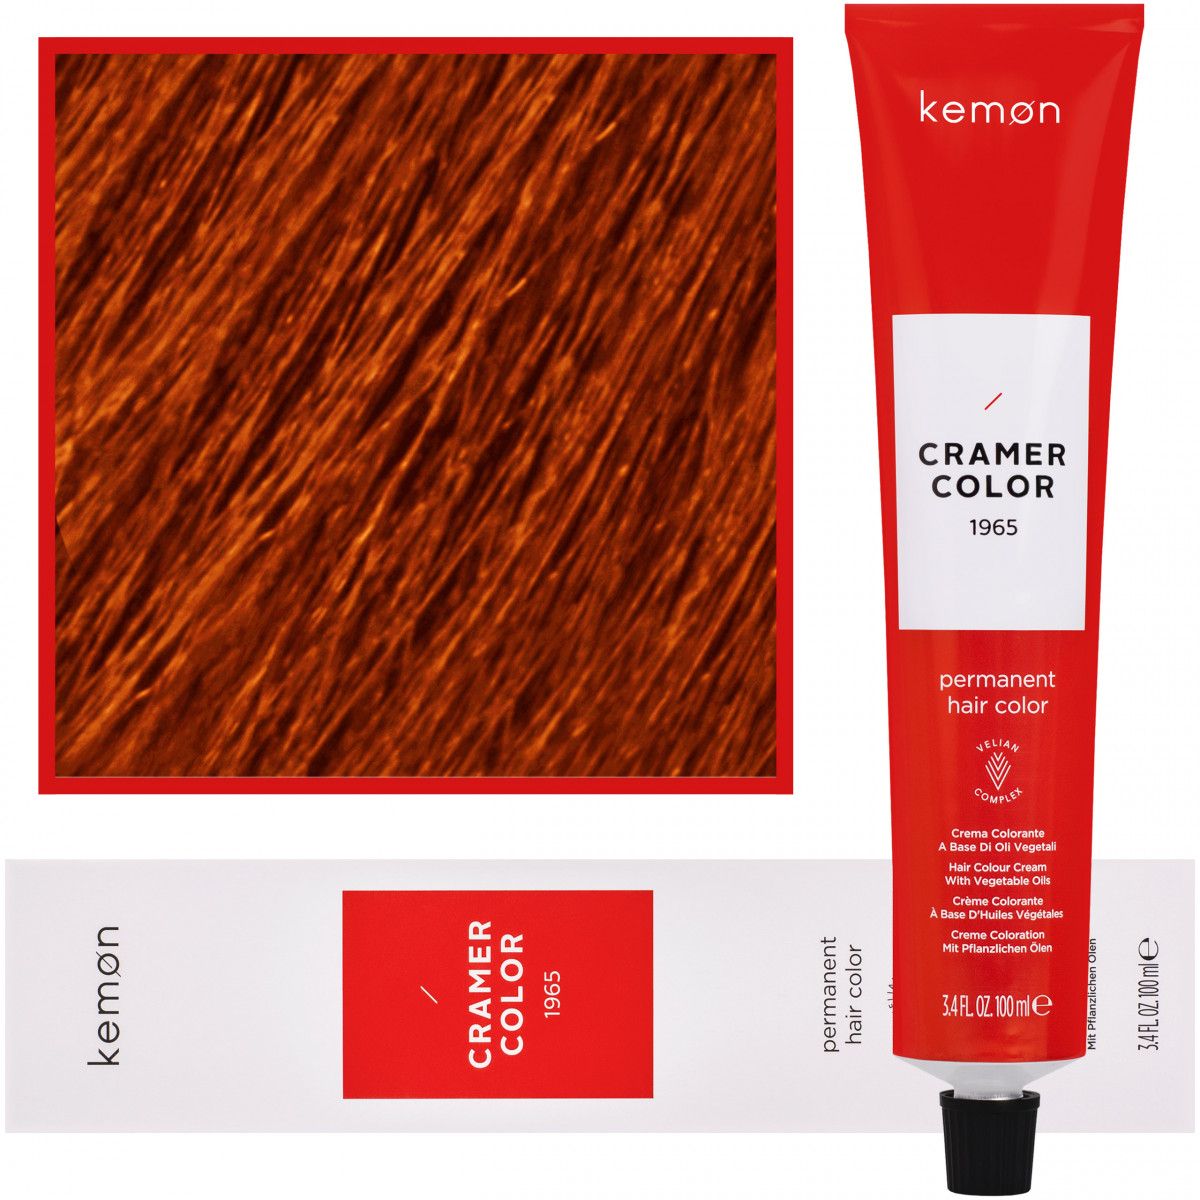 Kemon Cramer Color farba 100ml kolor 8,44 | Jasny Głęboki Miedziany Blond